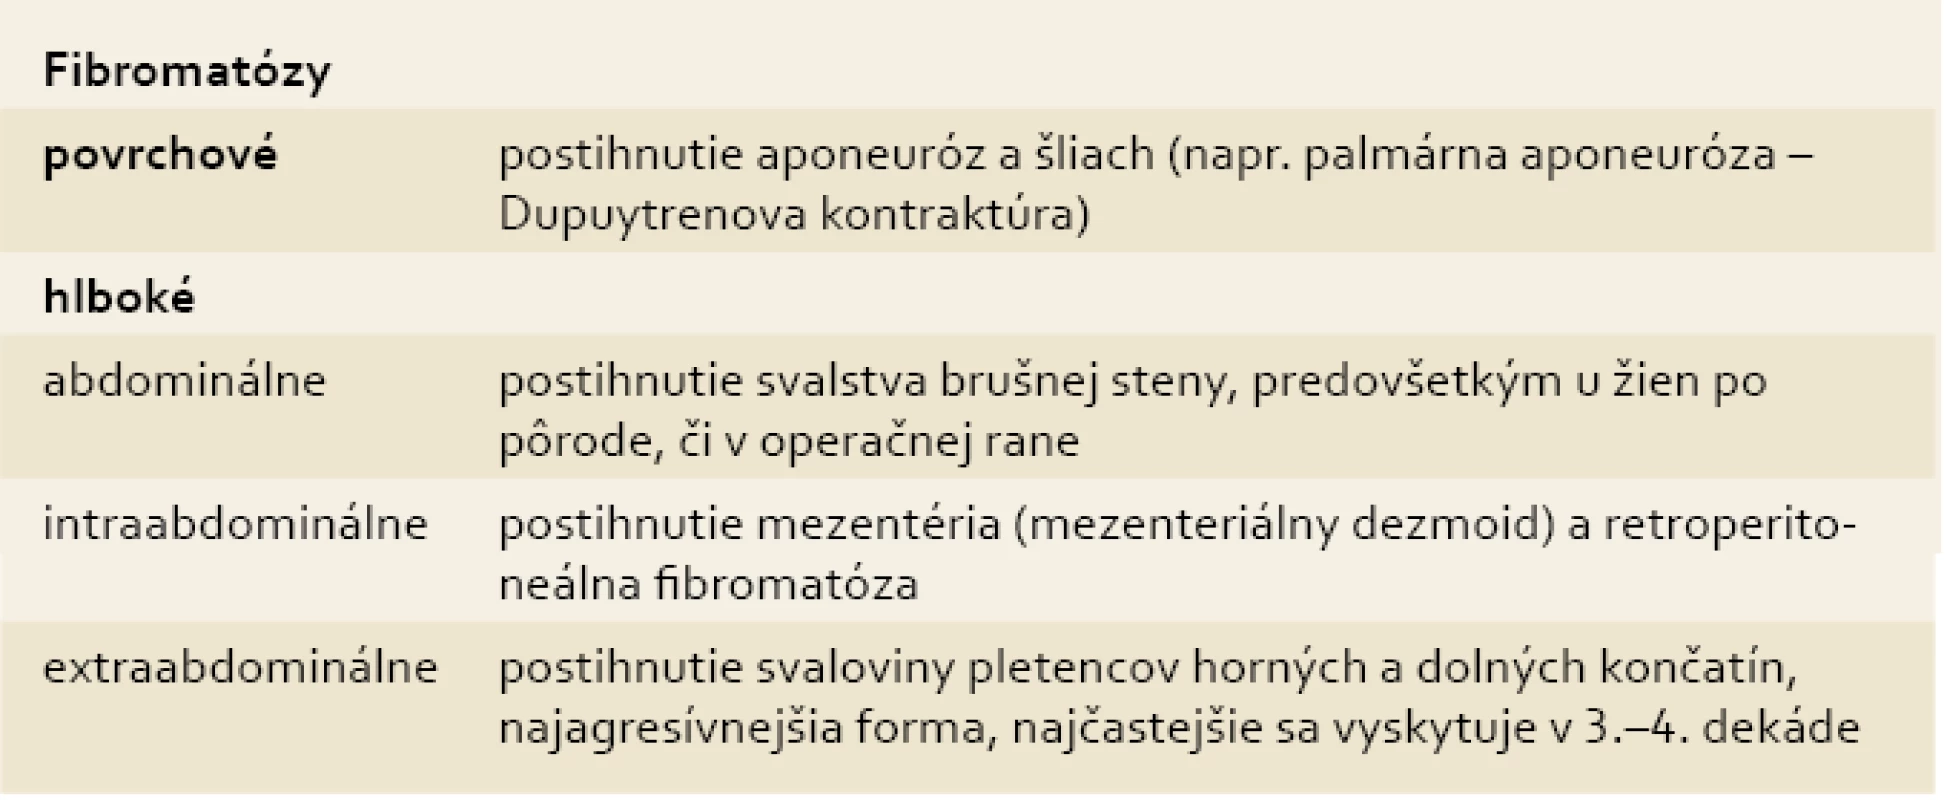 Rozdelenie fibromatóz.
Tab. 1. Fibromatosis classification.